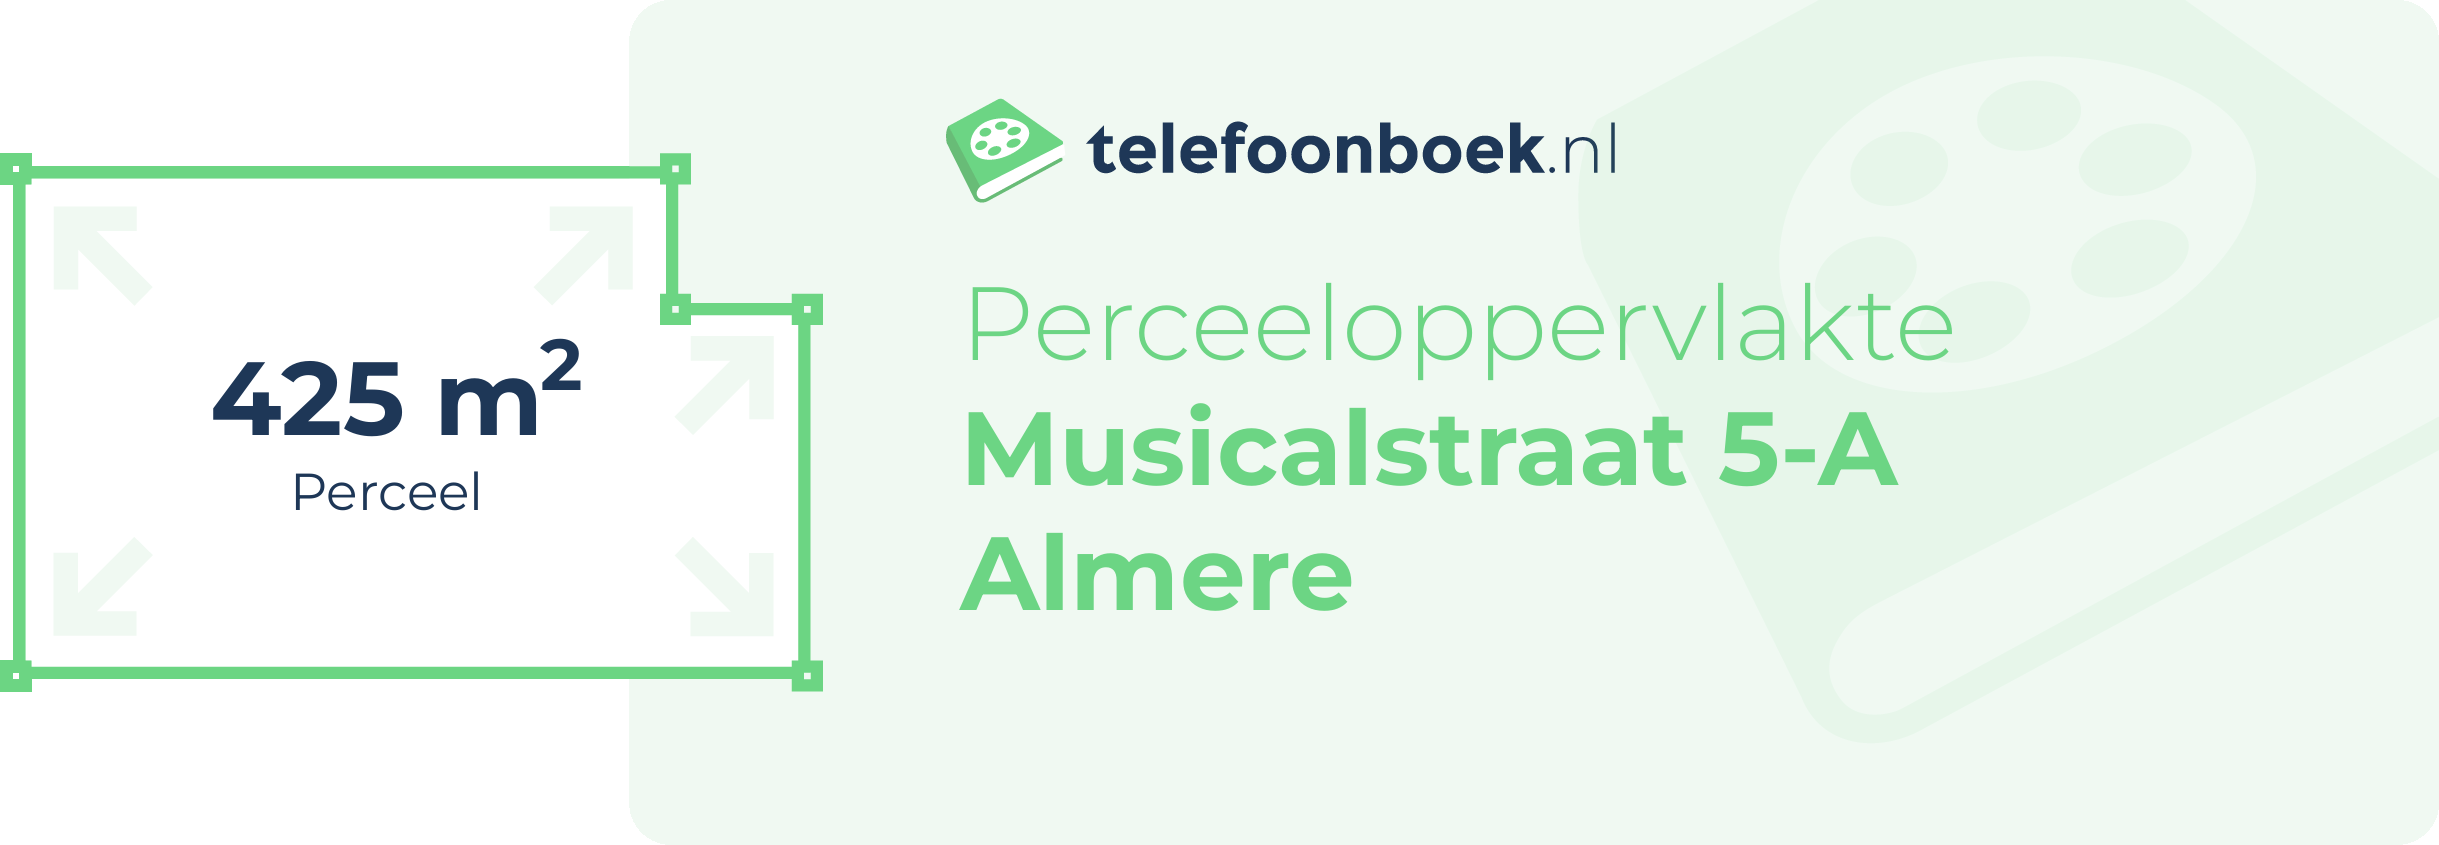 Perceeloppervlakte Musicalstraat 5-A Almere